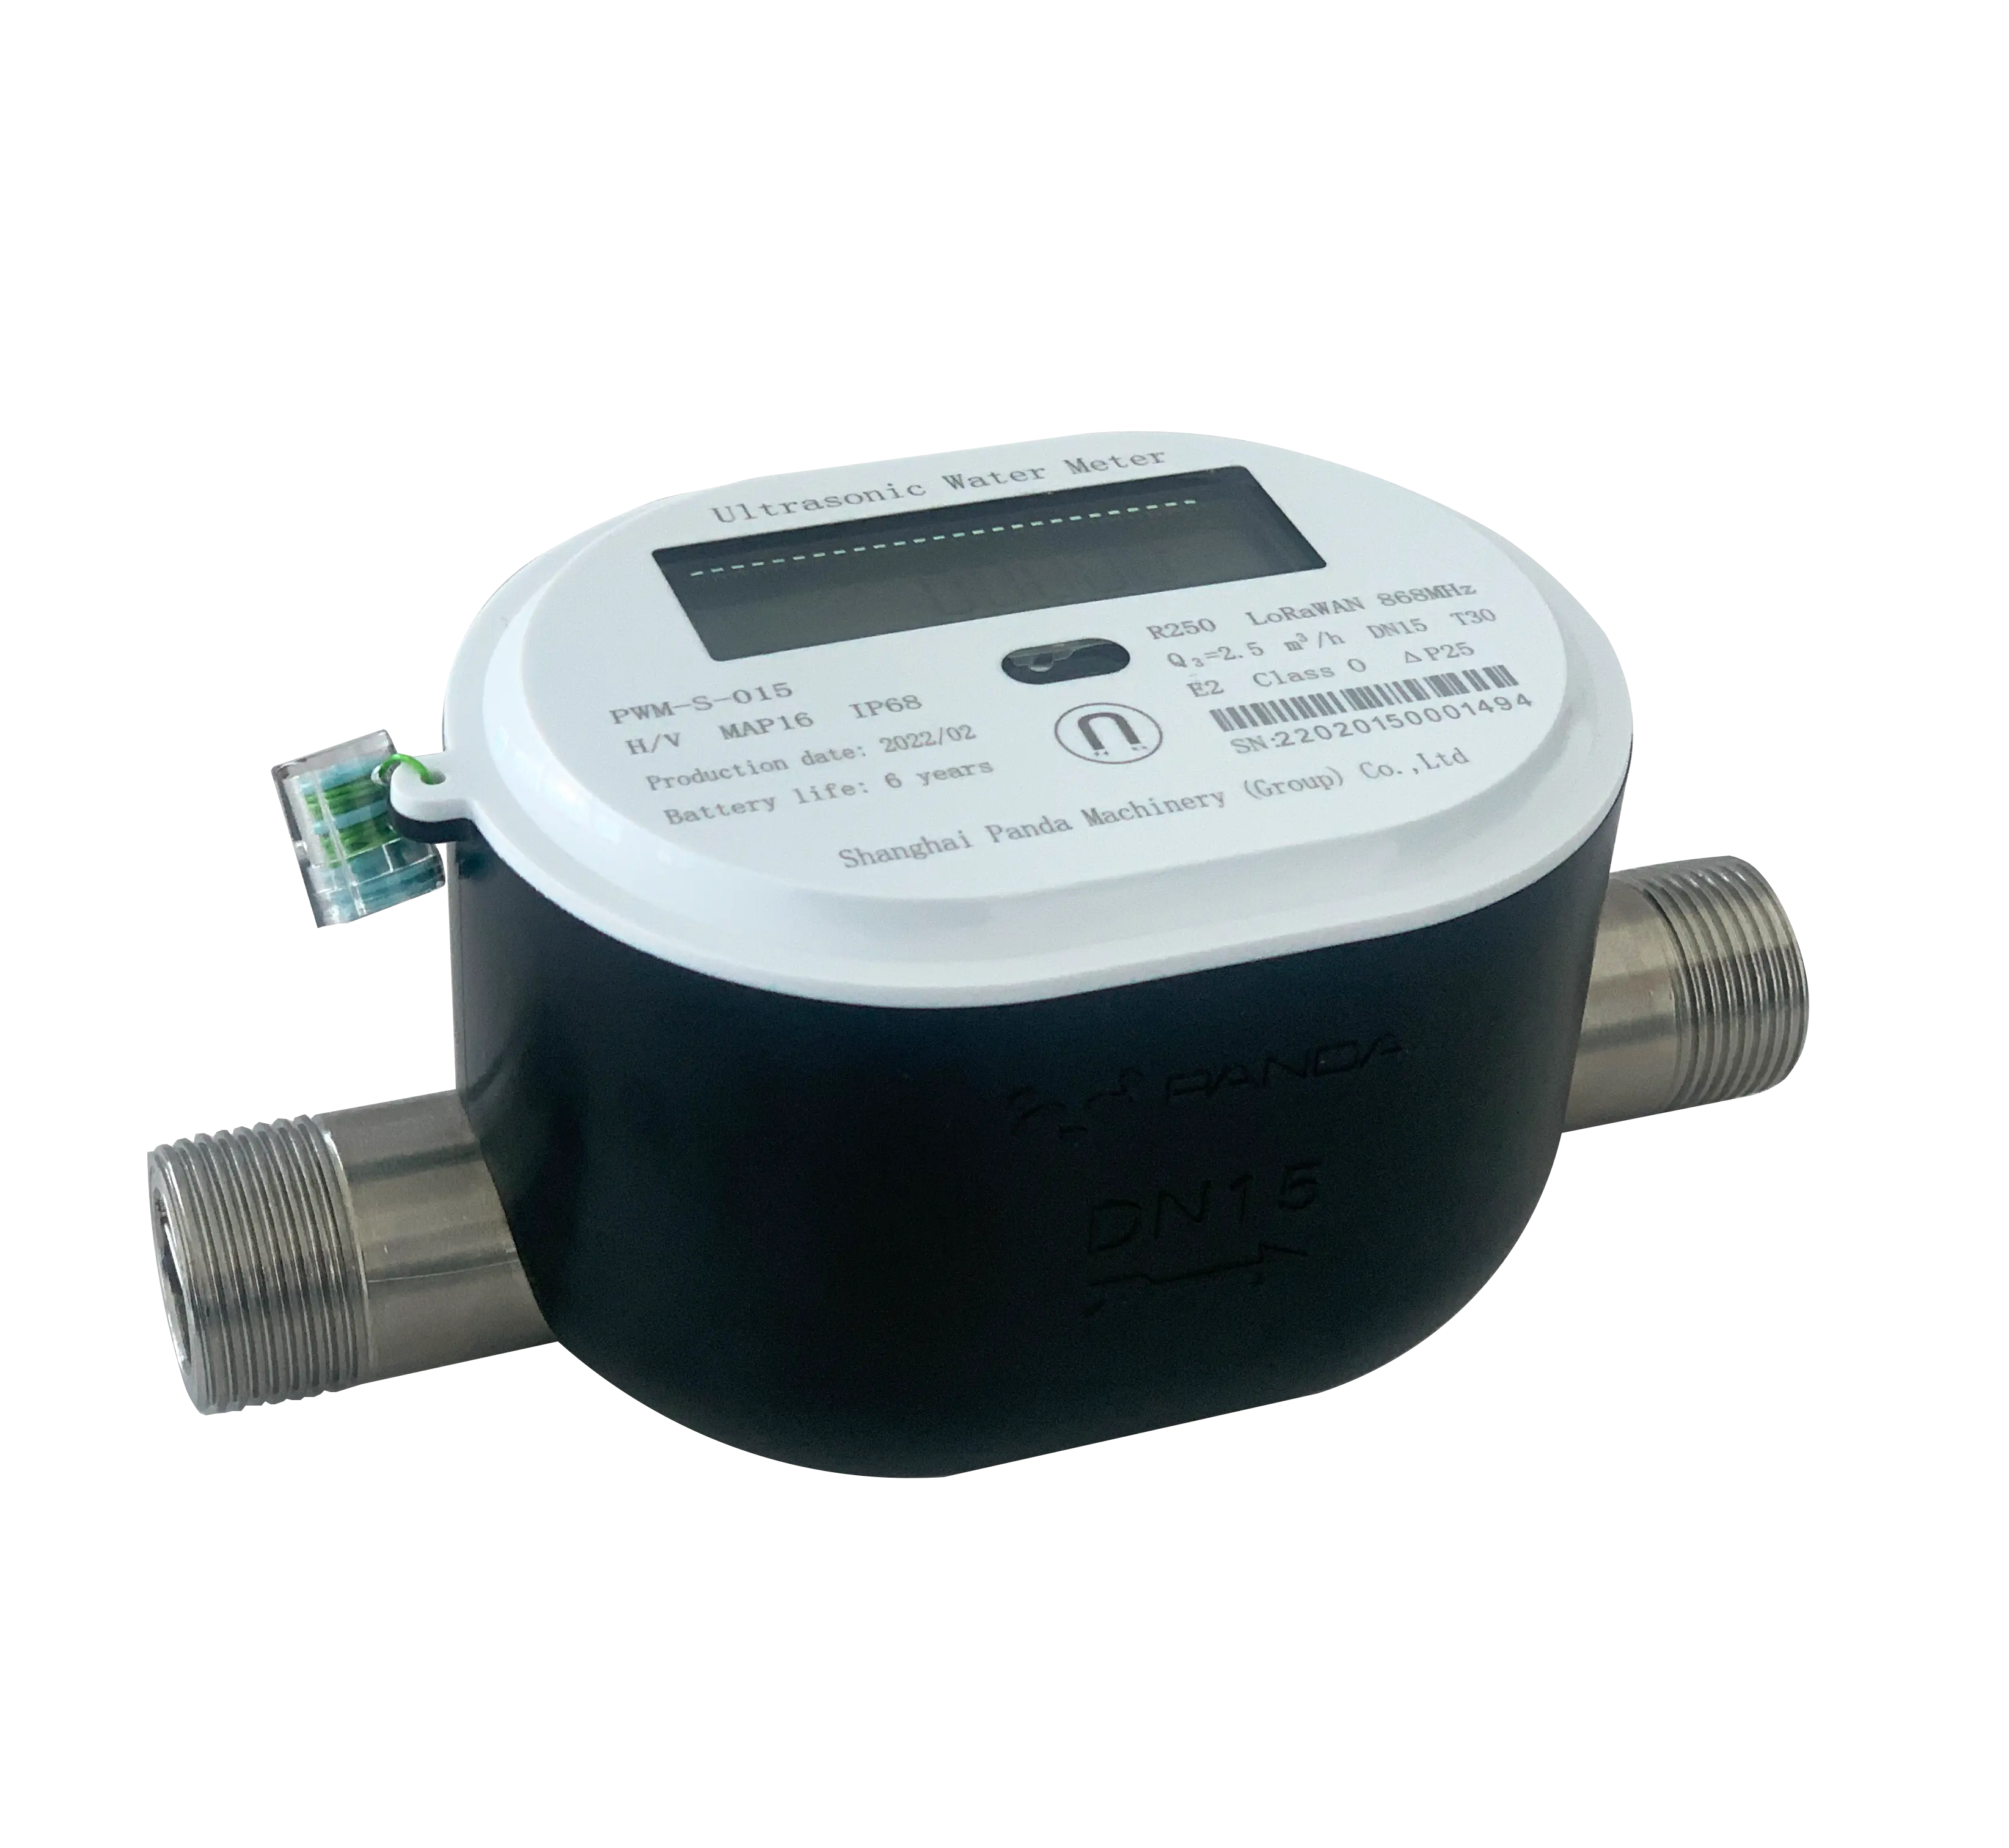 LoRaWAN wireless remote valve control prepaid smart water meter